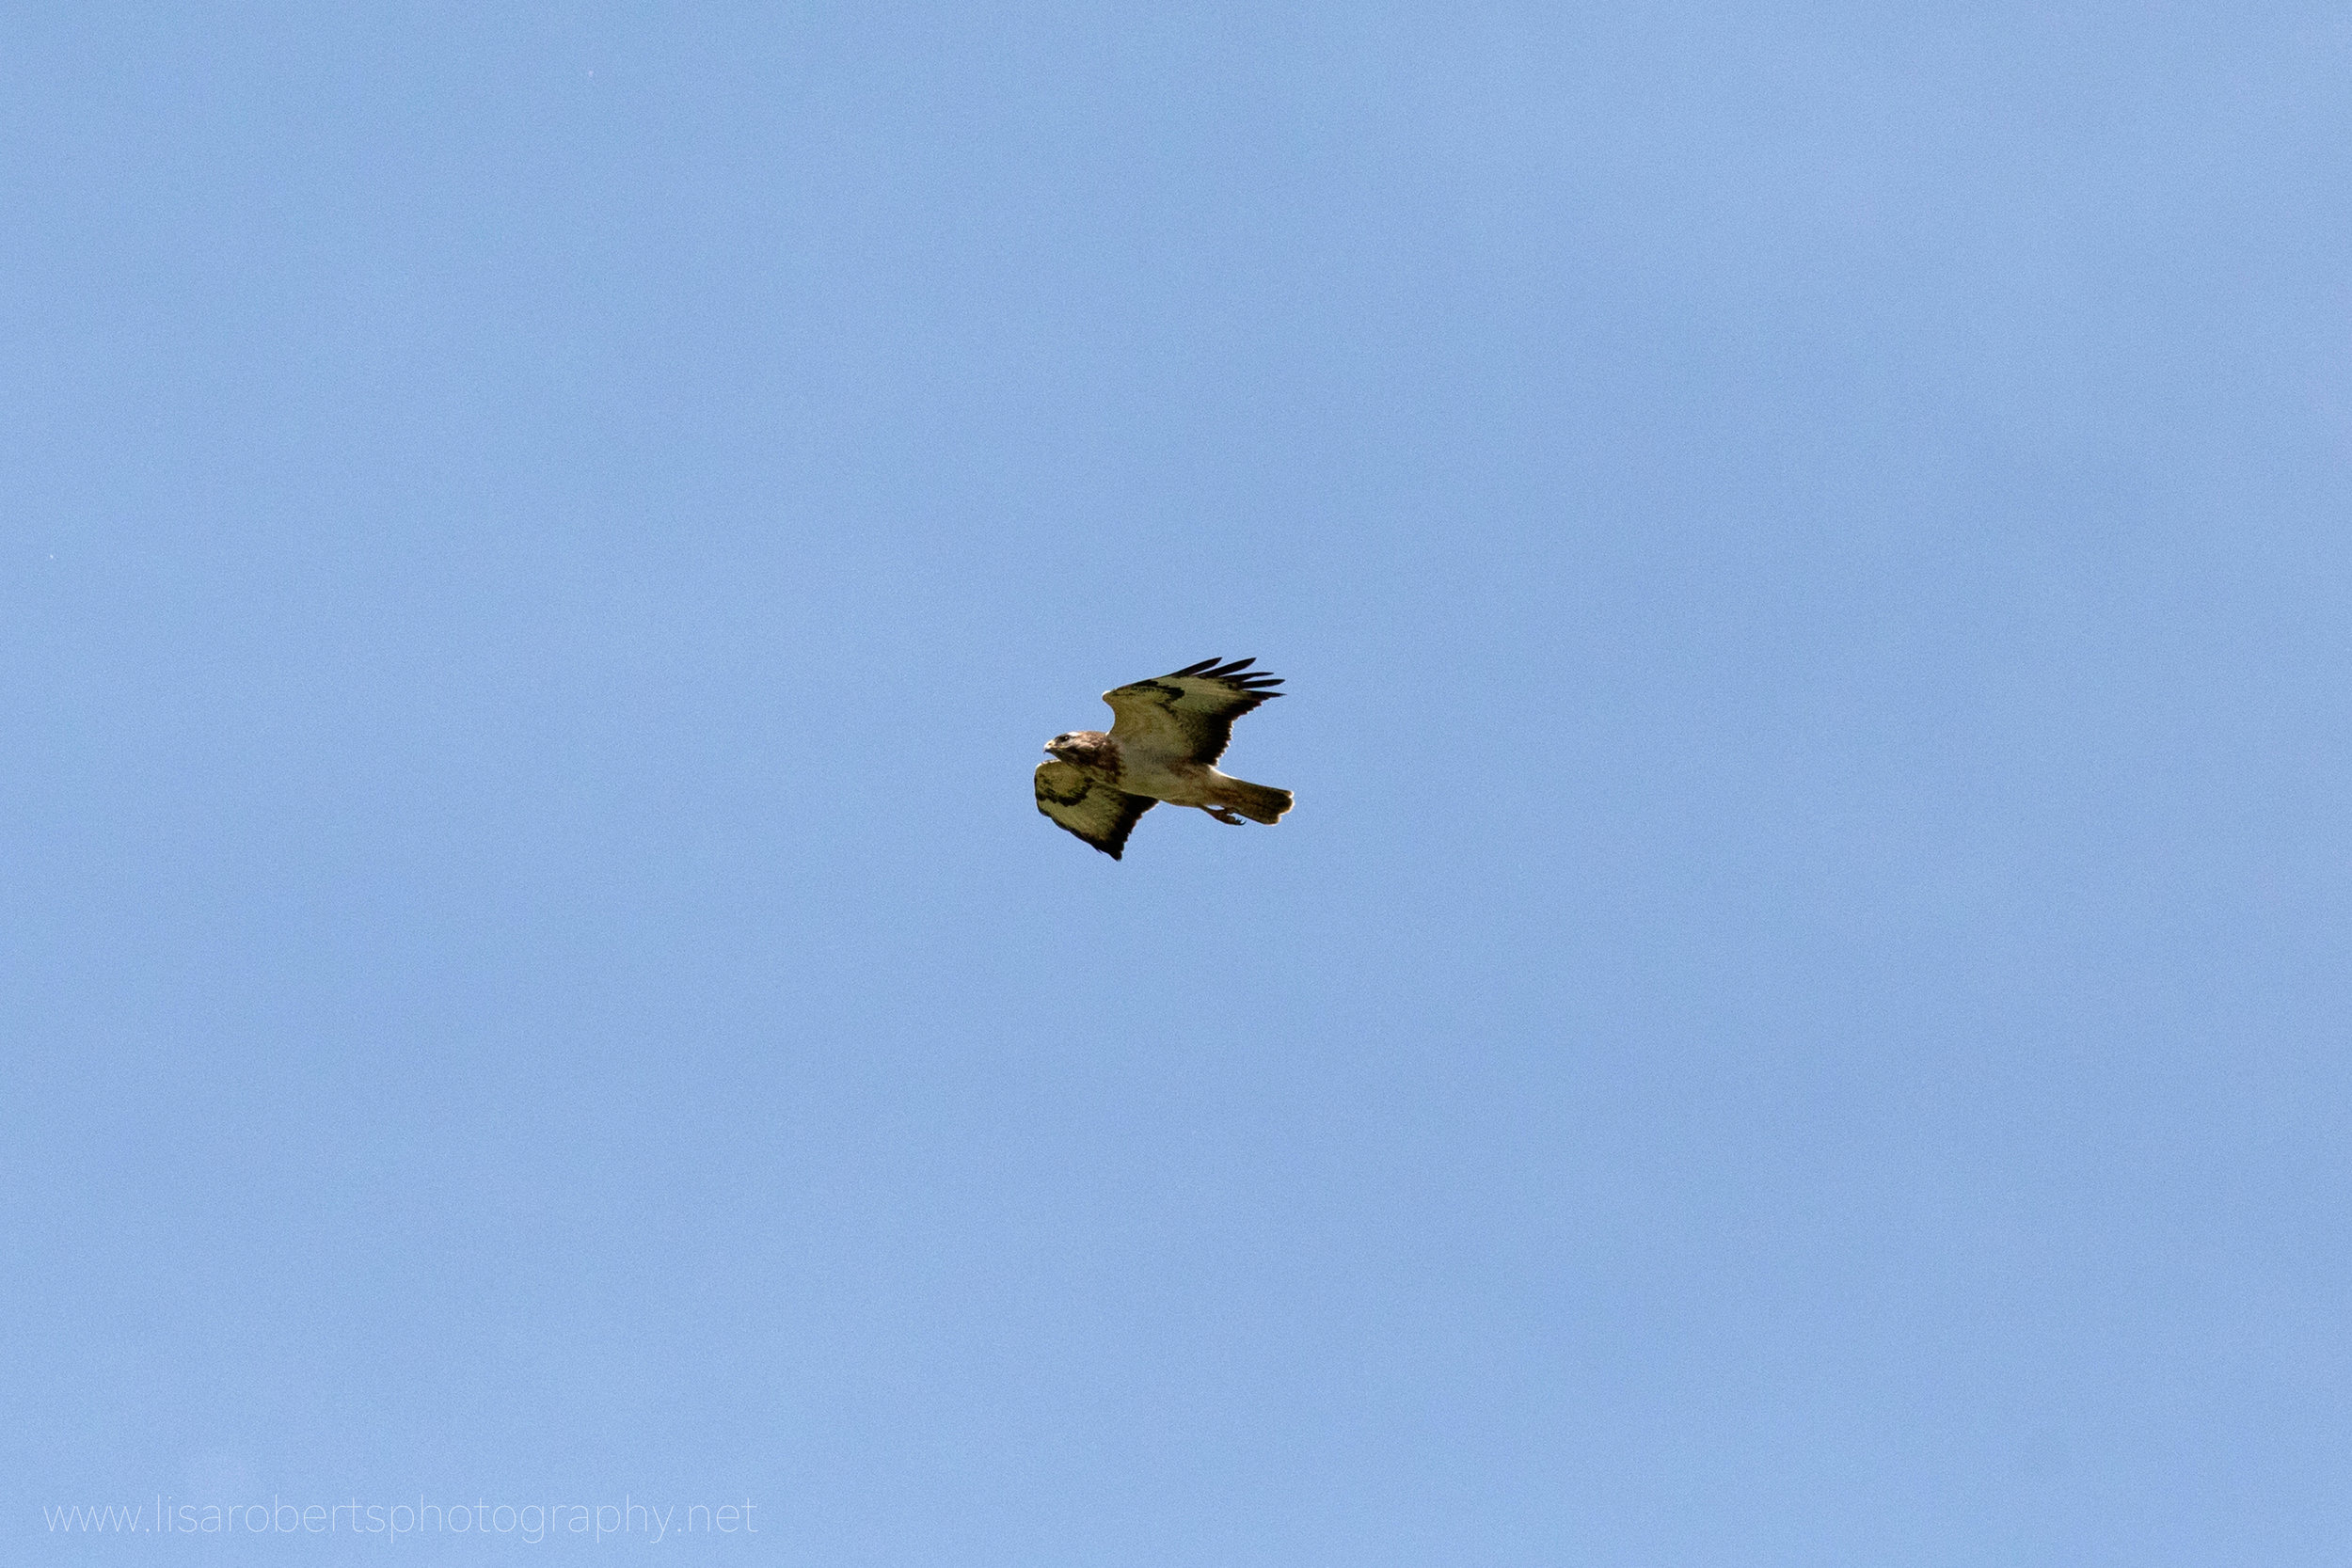  Common Buzzard in flight 